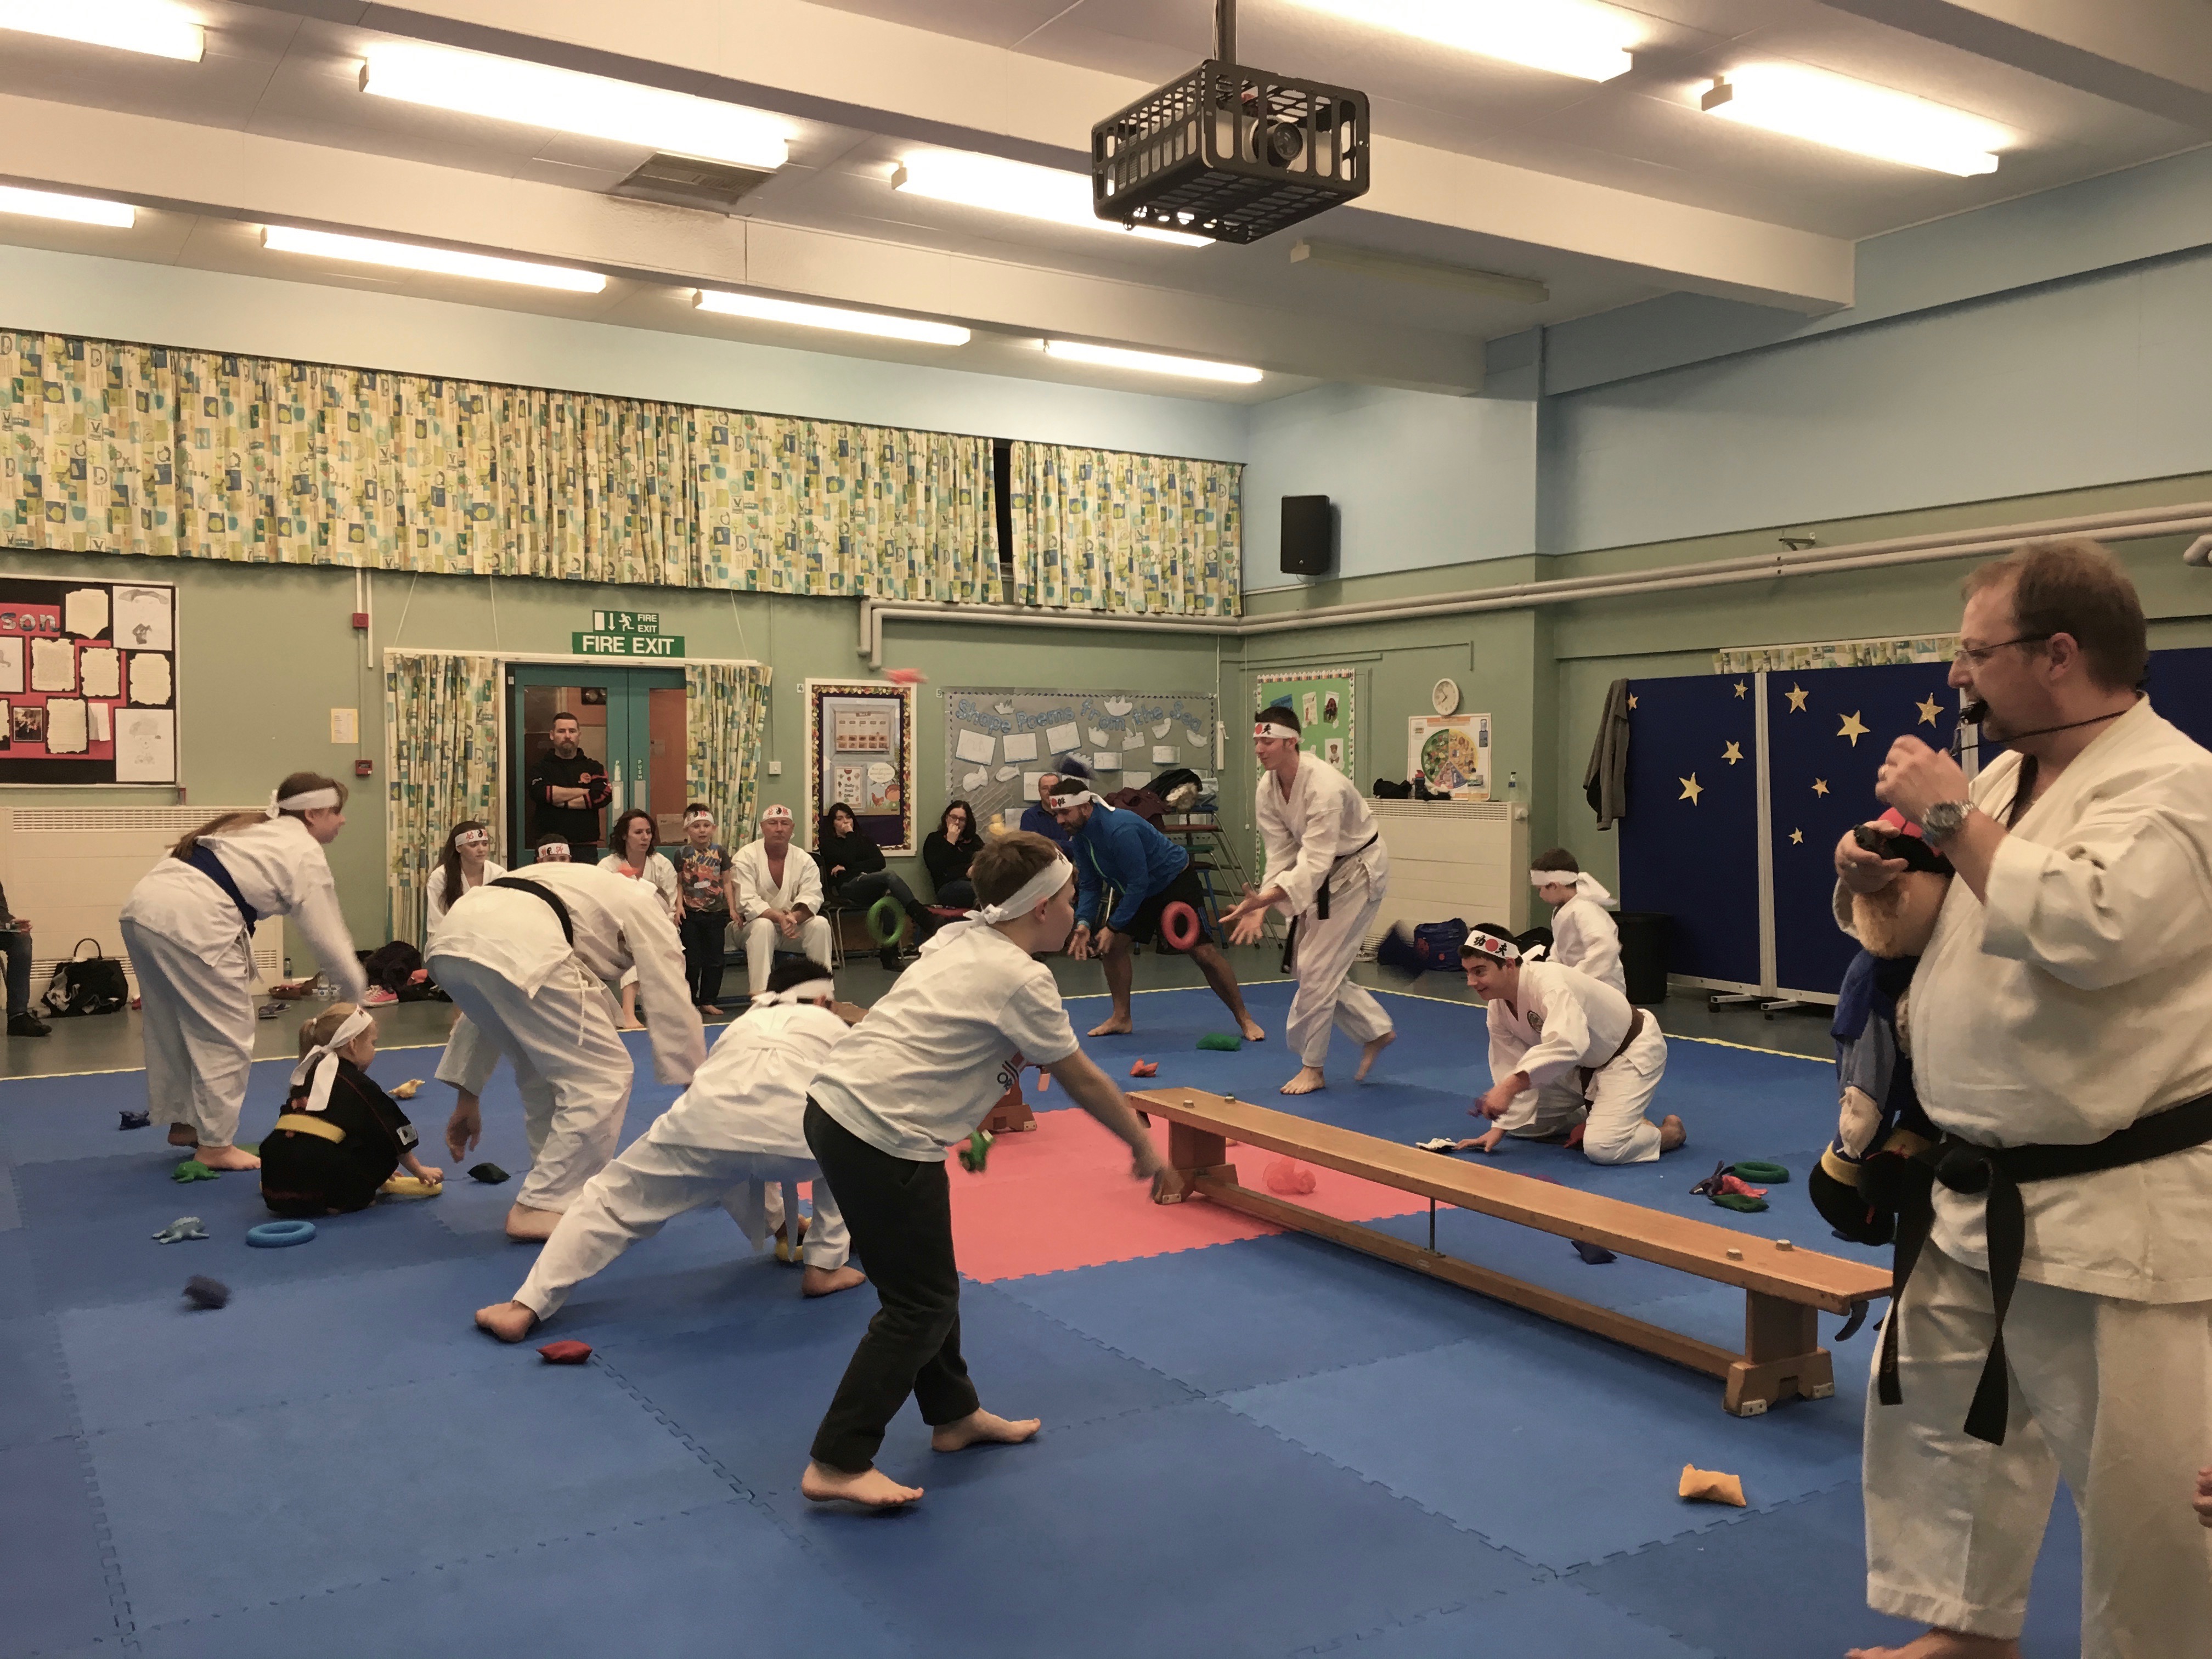 Great Yarmouth Shukokai Karate Club